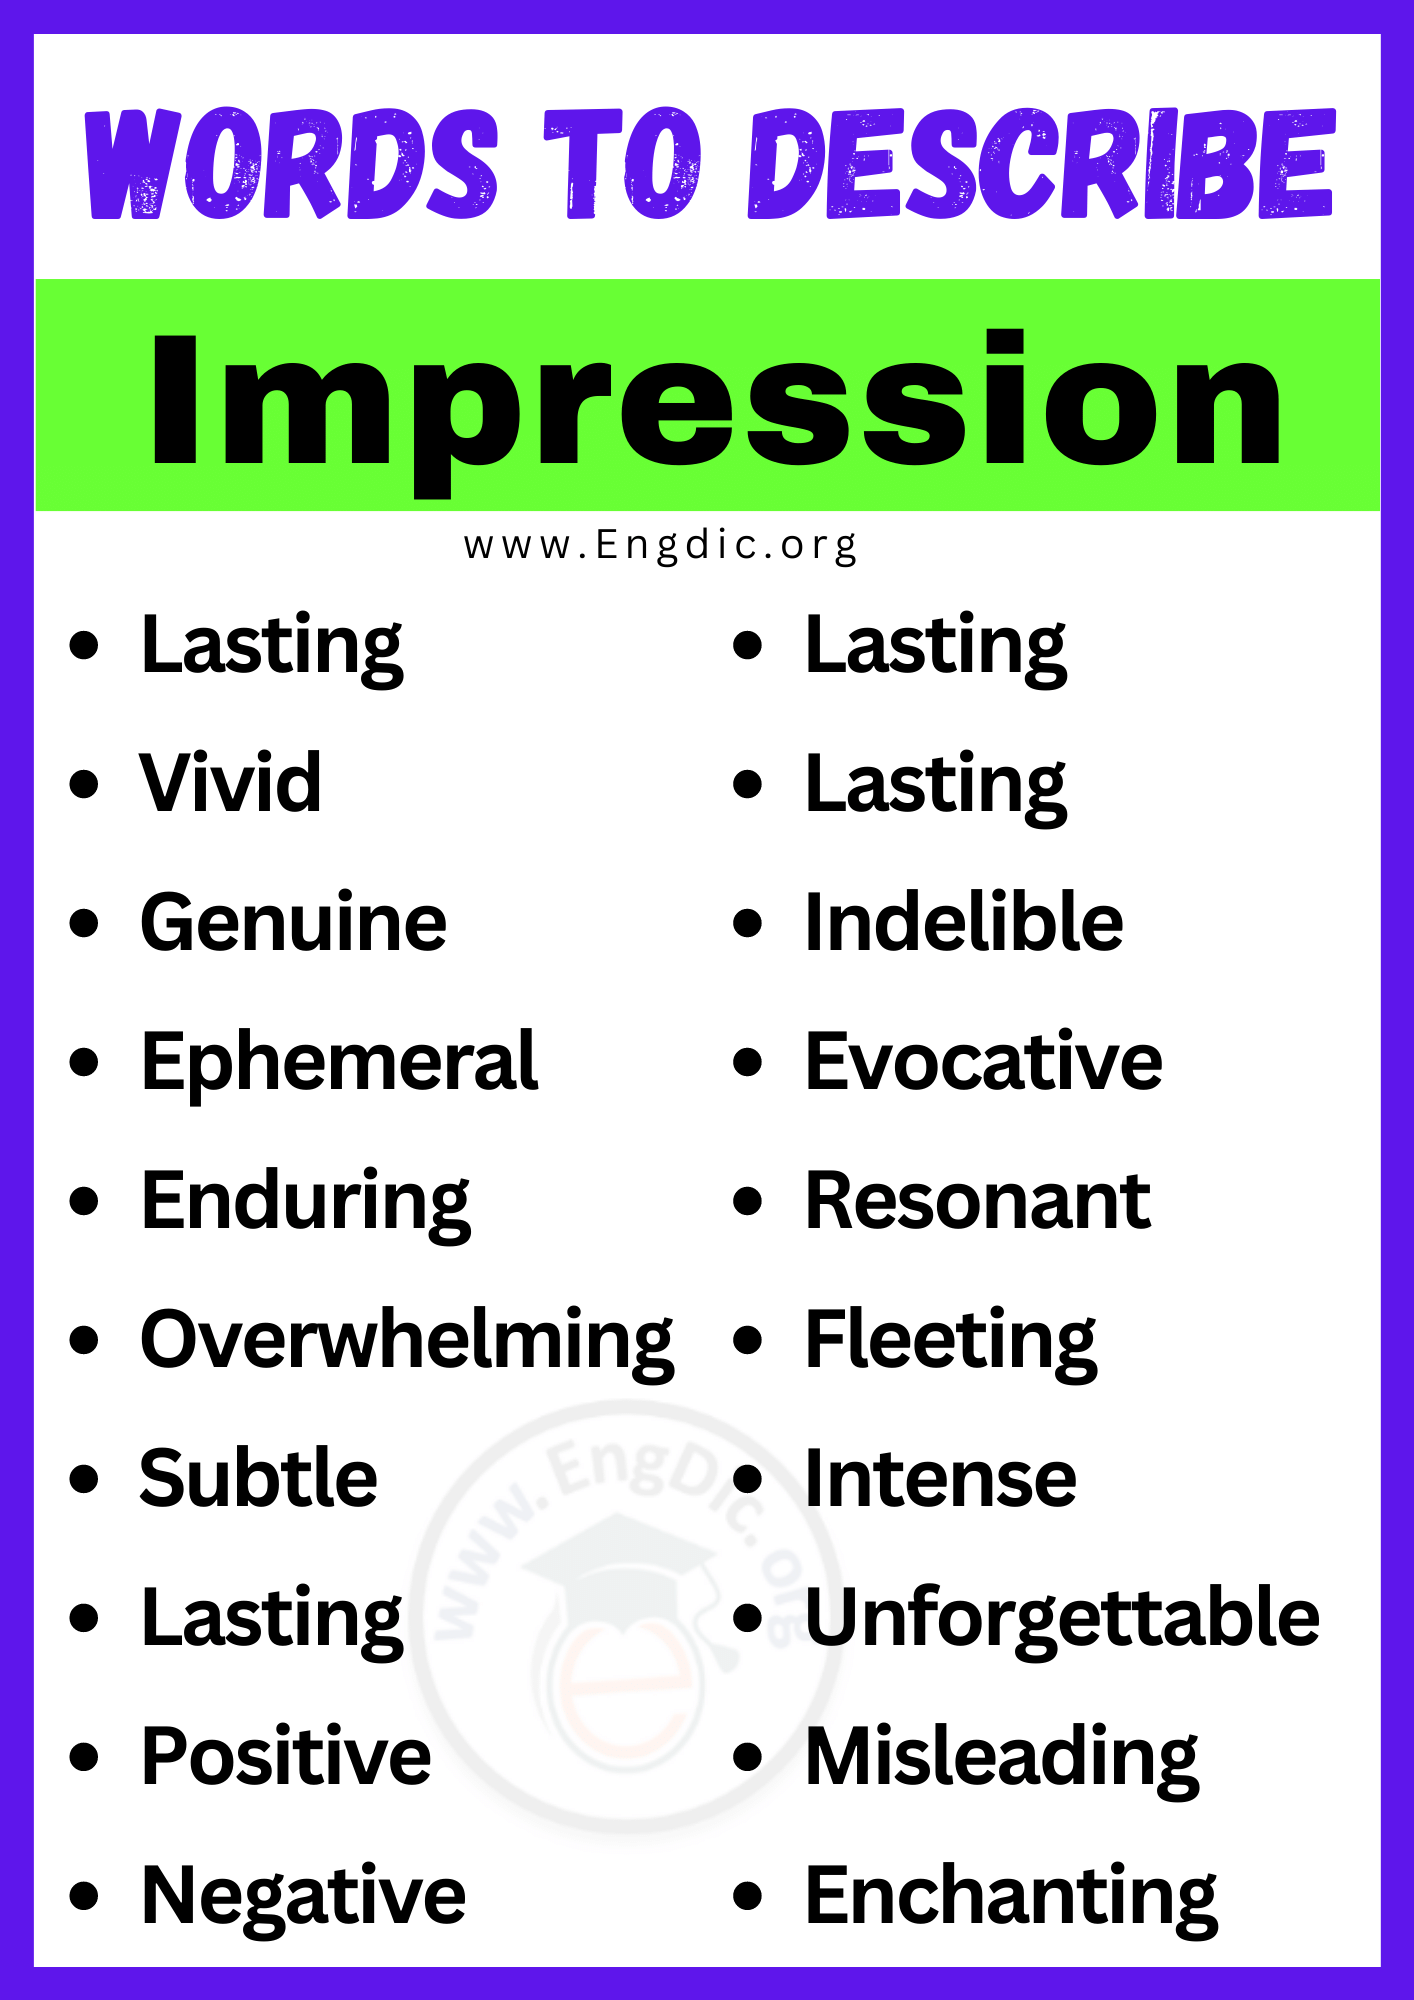 Words to Describe Impression